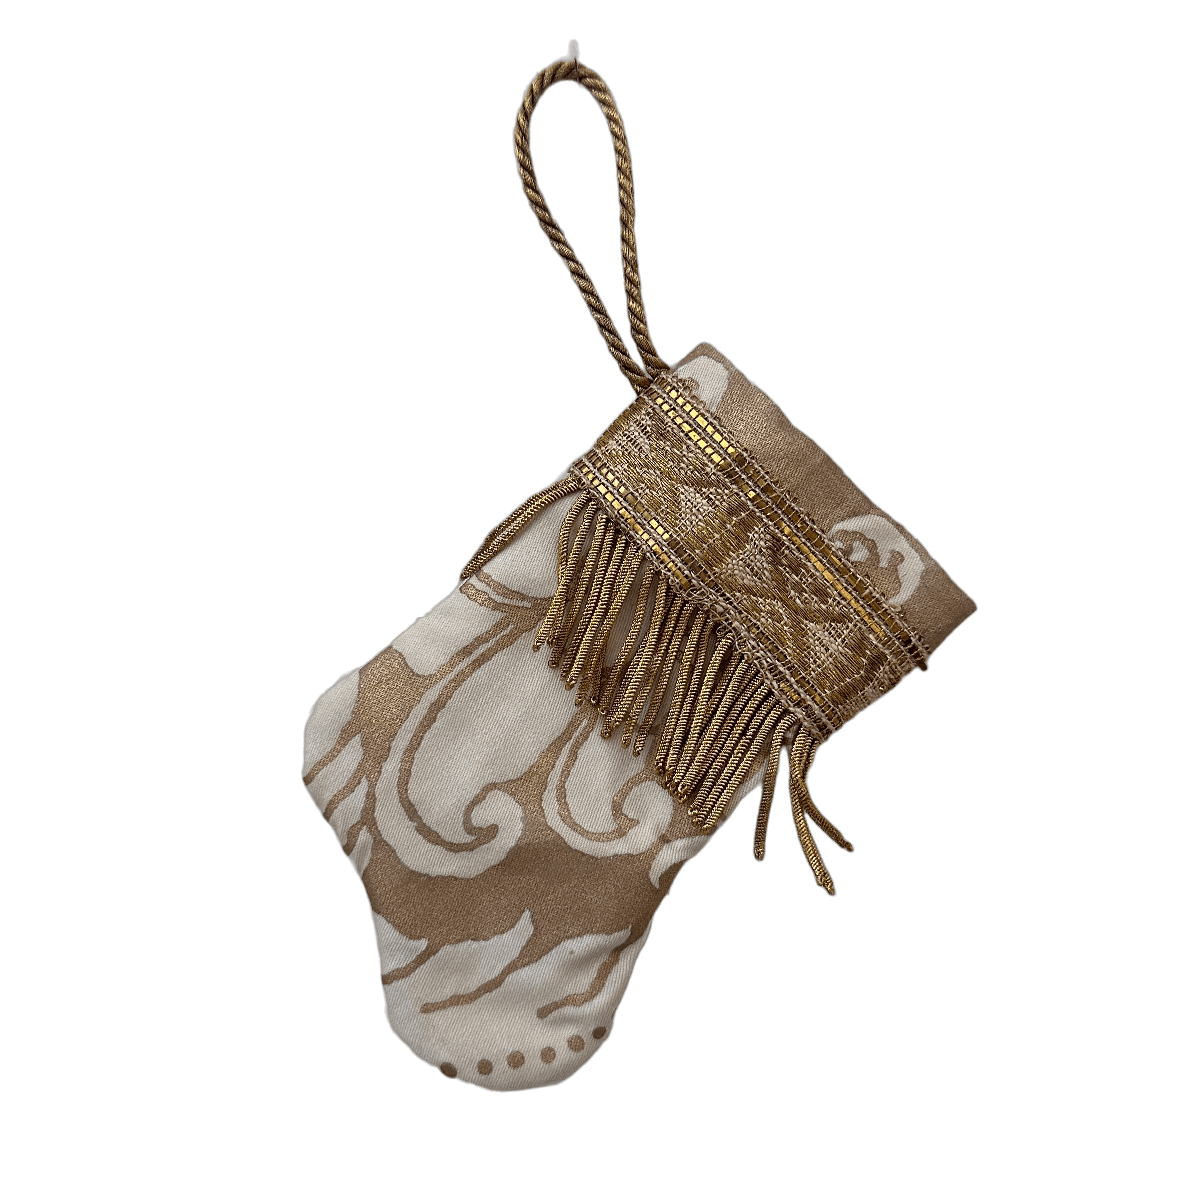 Handmade Mini Stocking Ornament from Antique & Vintage Textiles, Trims | White and Gold Fortuny Ornament B. Viz Design C 